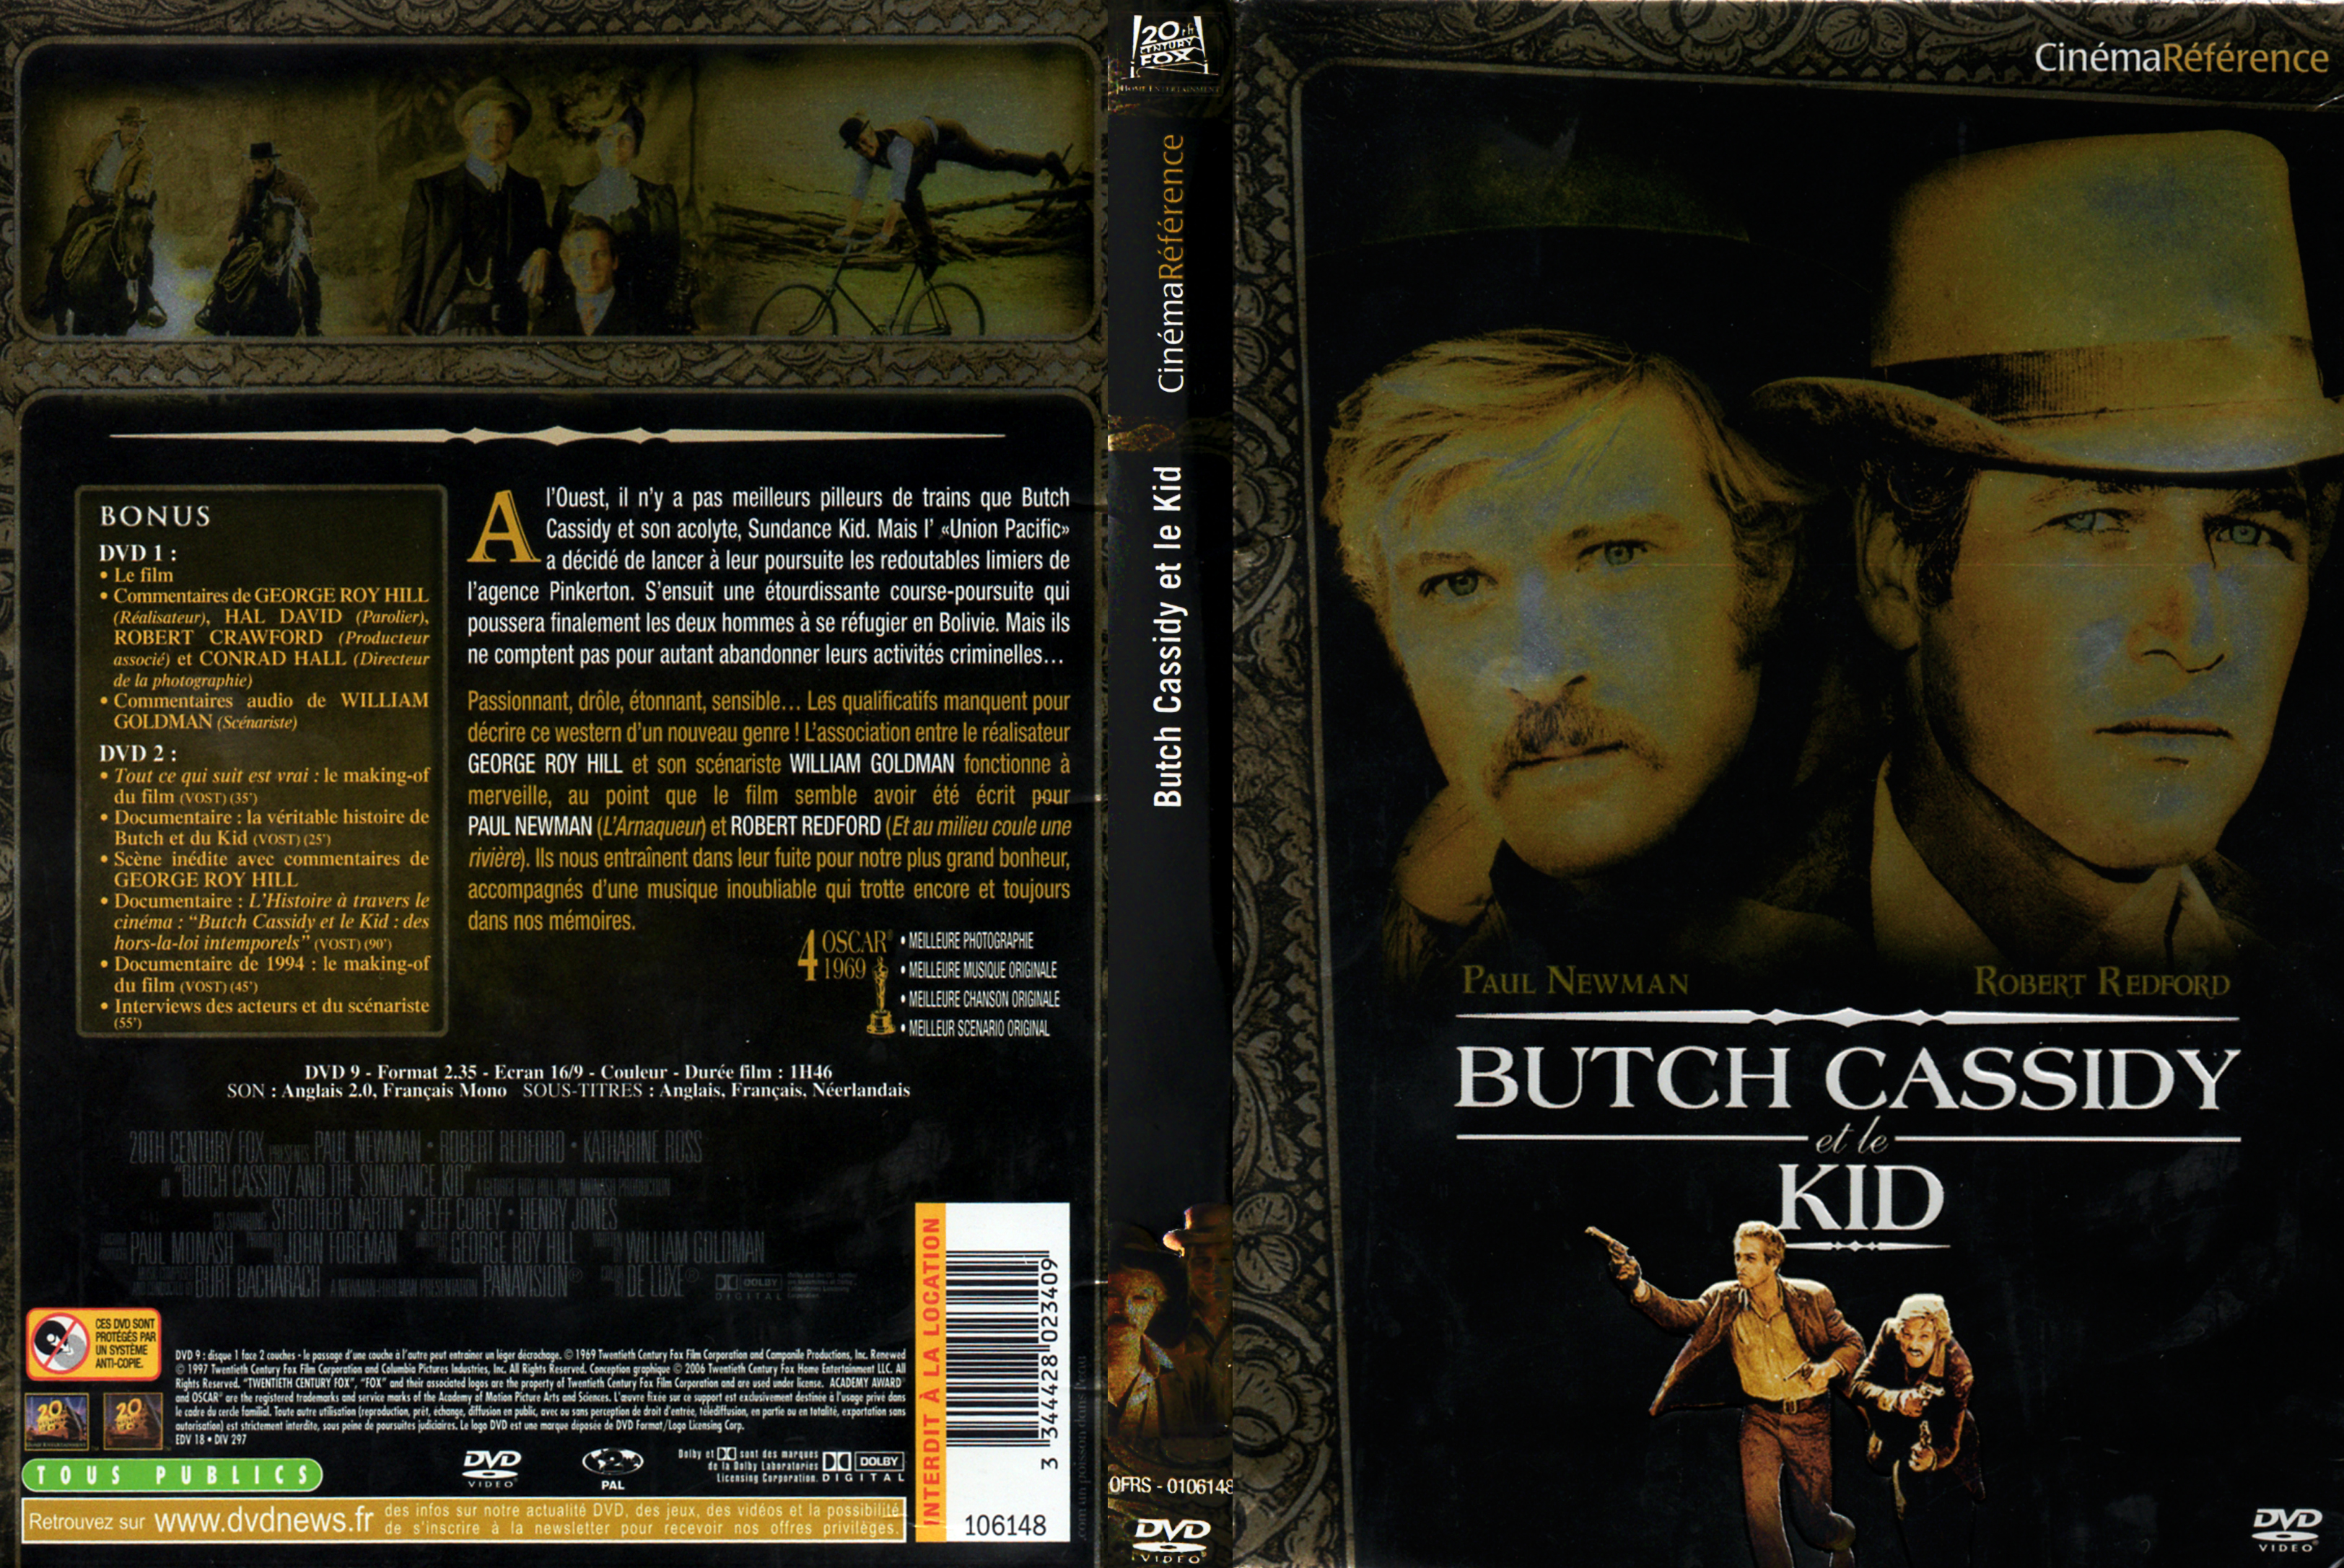 Jaquette DVD Butch Cassidy et le Kid v2